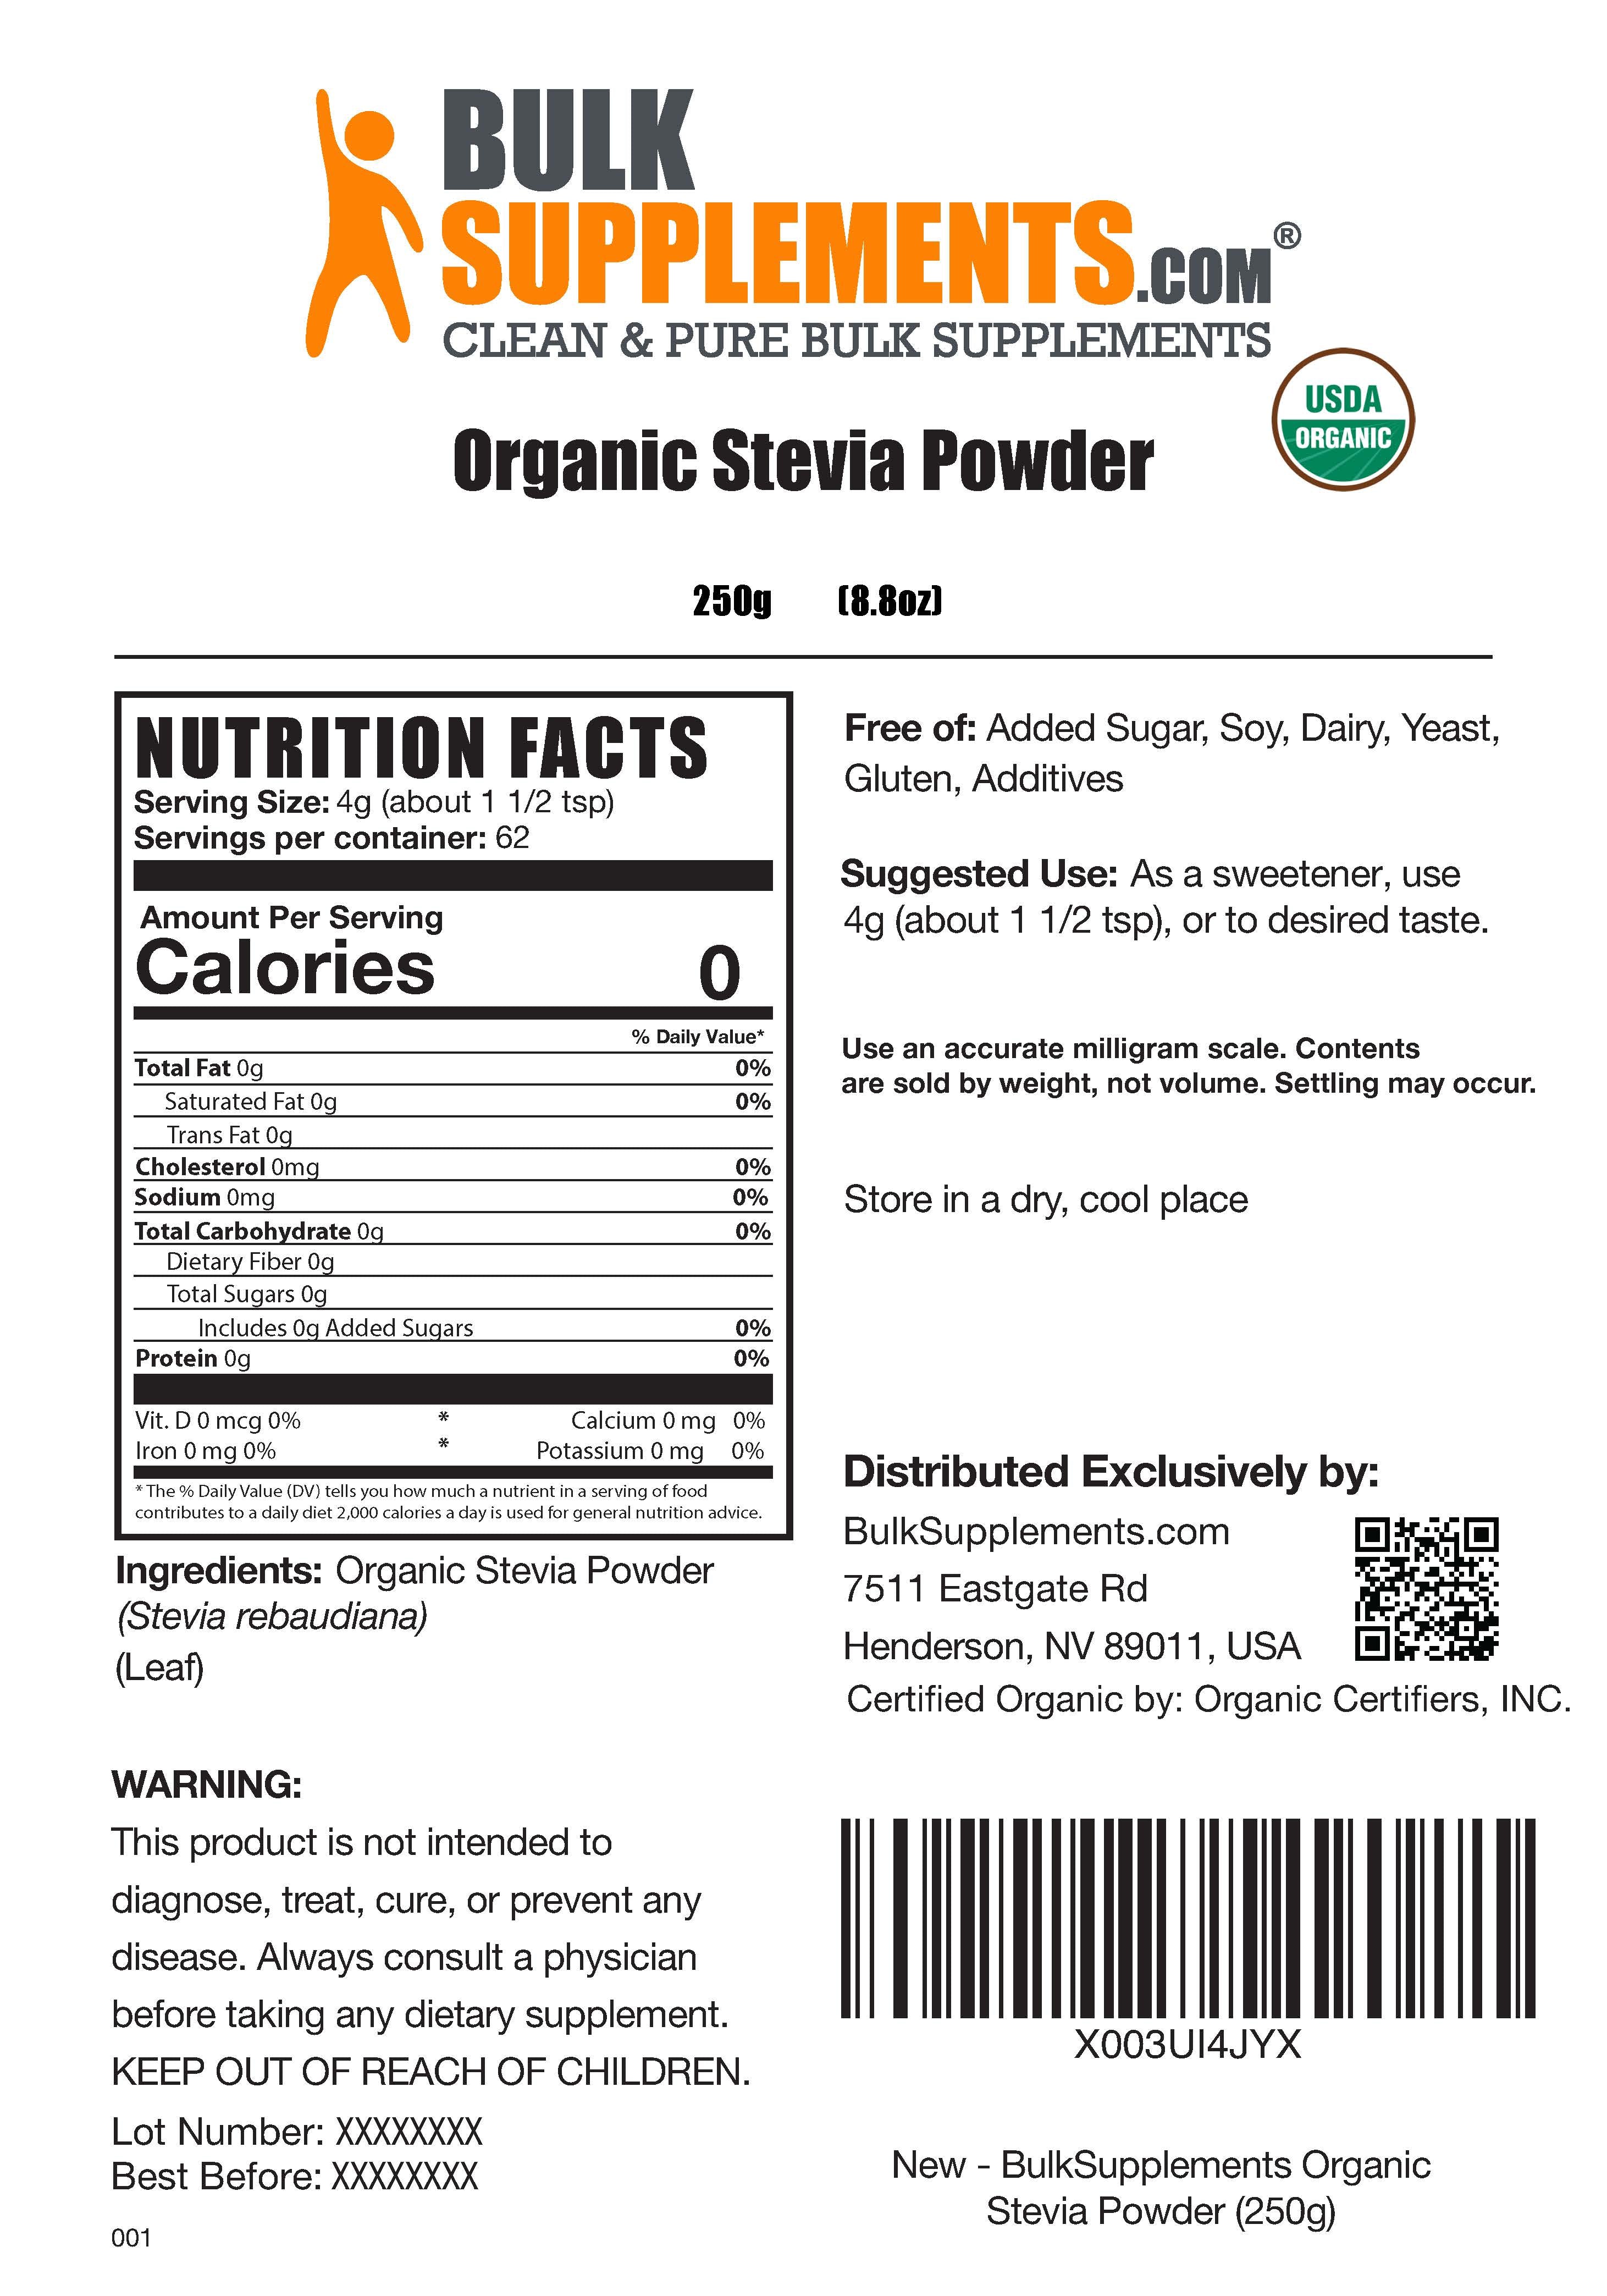 Organic Stevia Powder label 250g